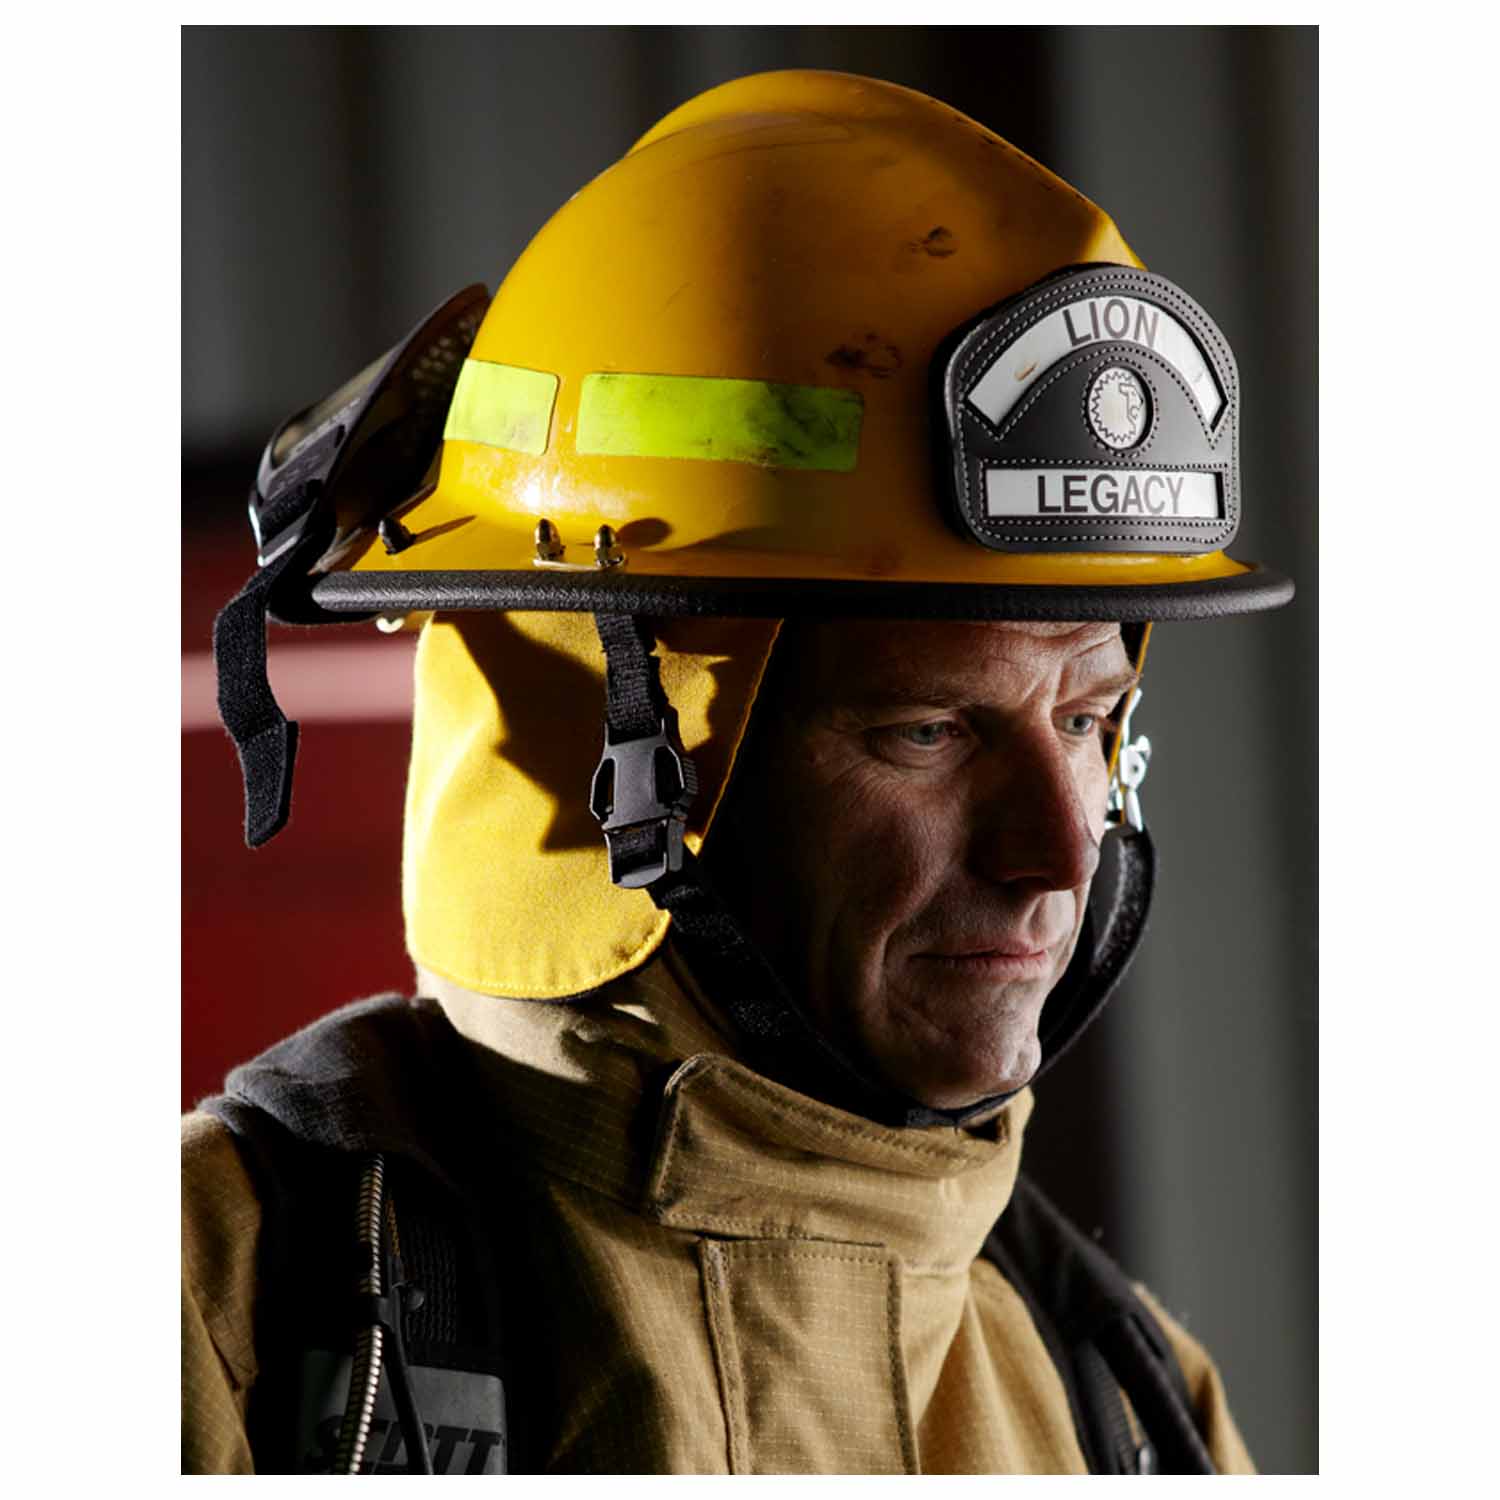 LION American Legacy 5 NFPA Firefighting Helmet